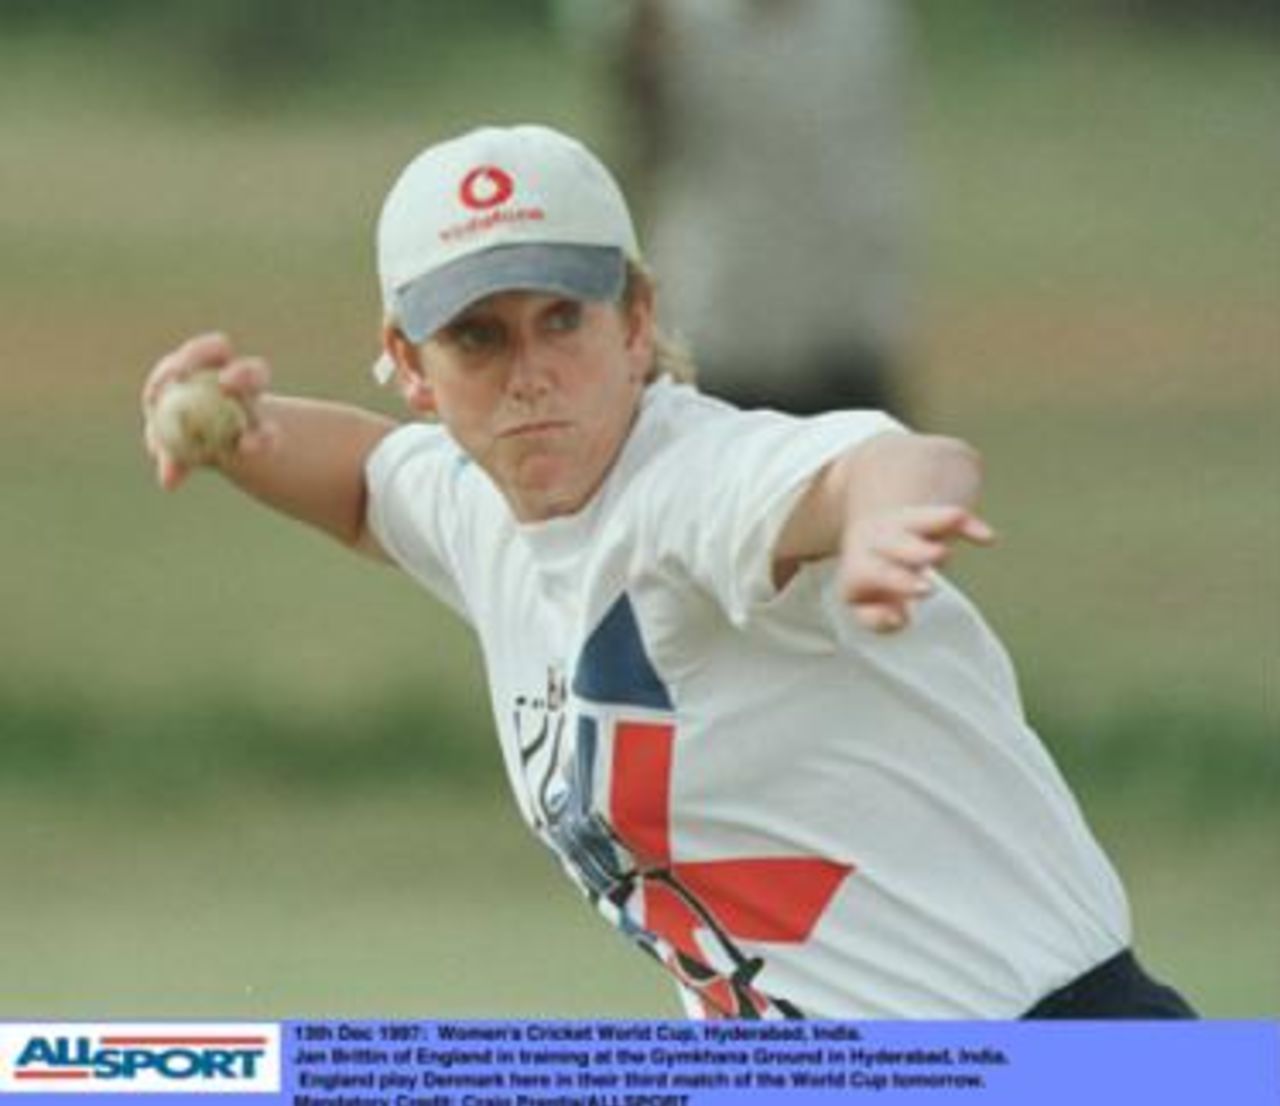 Women's World Cup India, Dec 1997 Jan Brittin at practice, Hyderabad